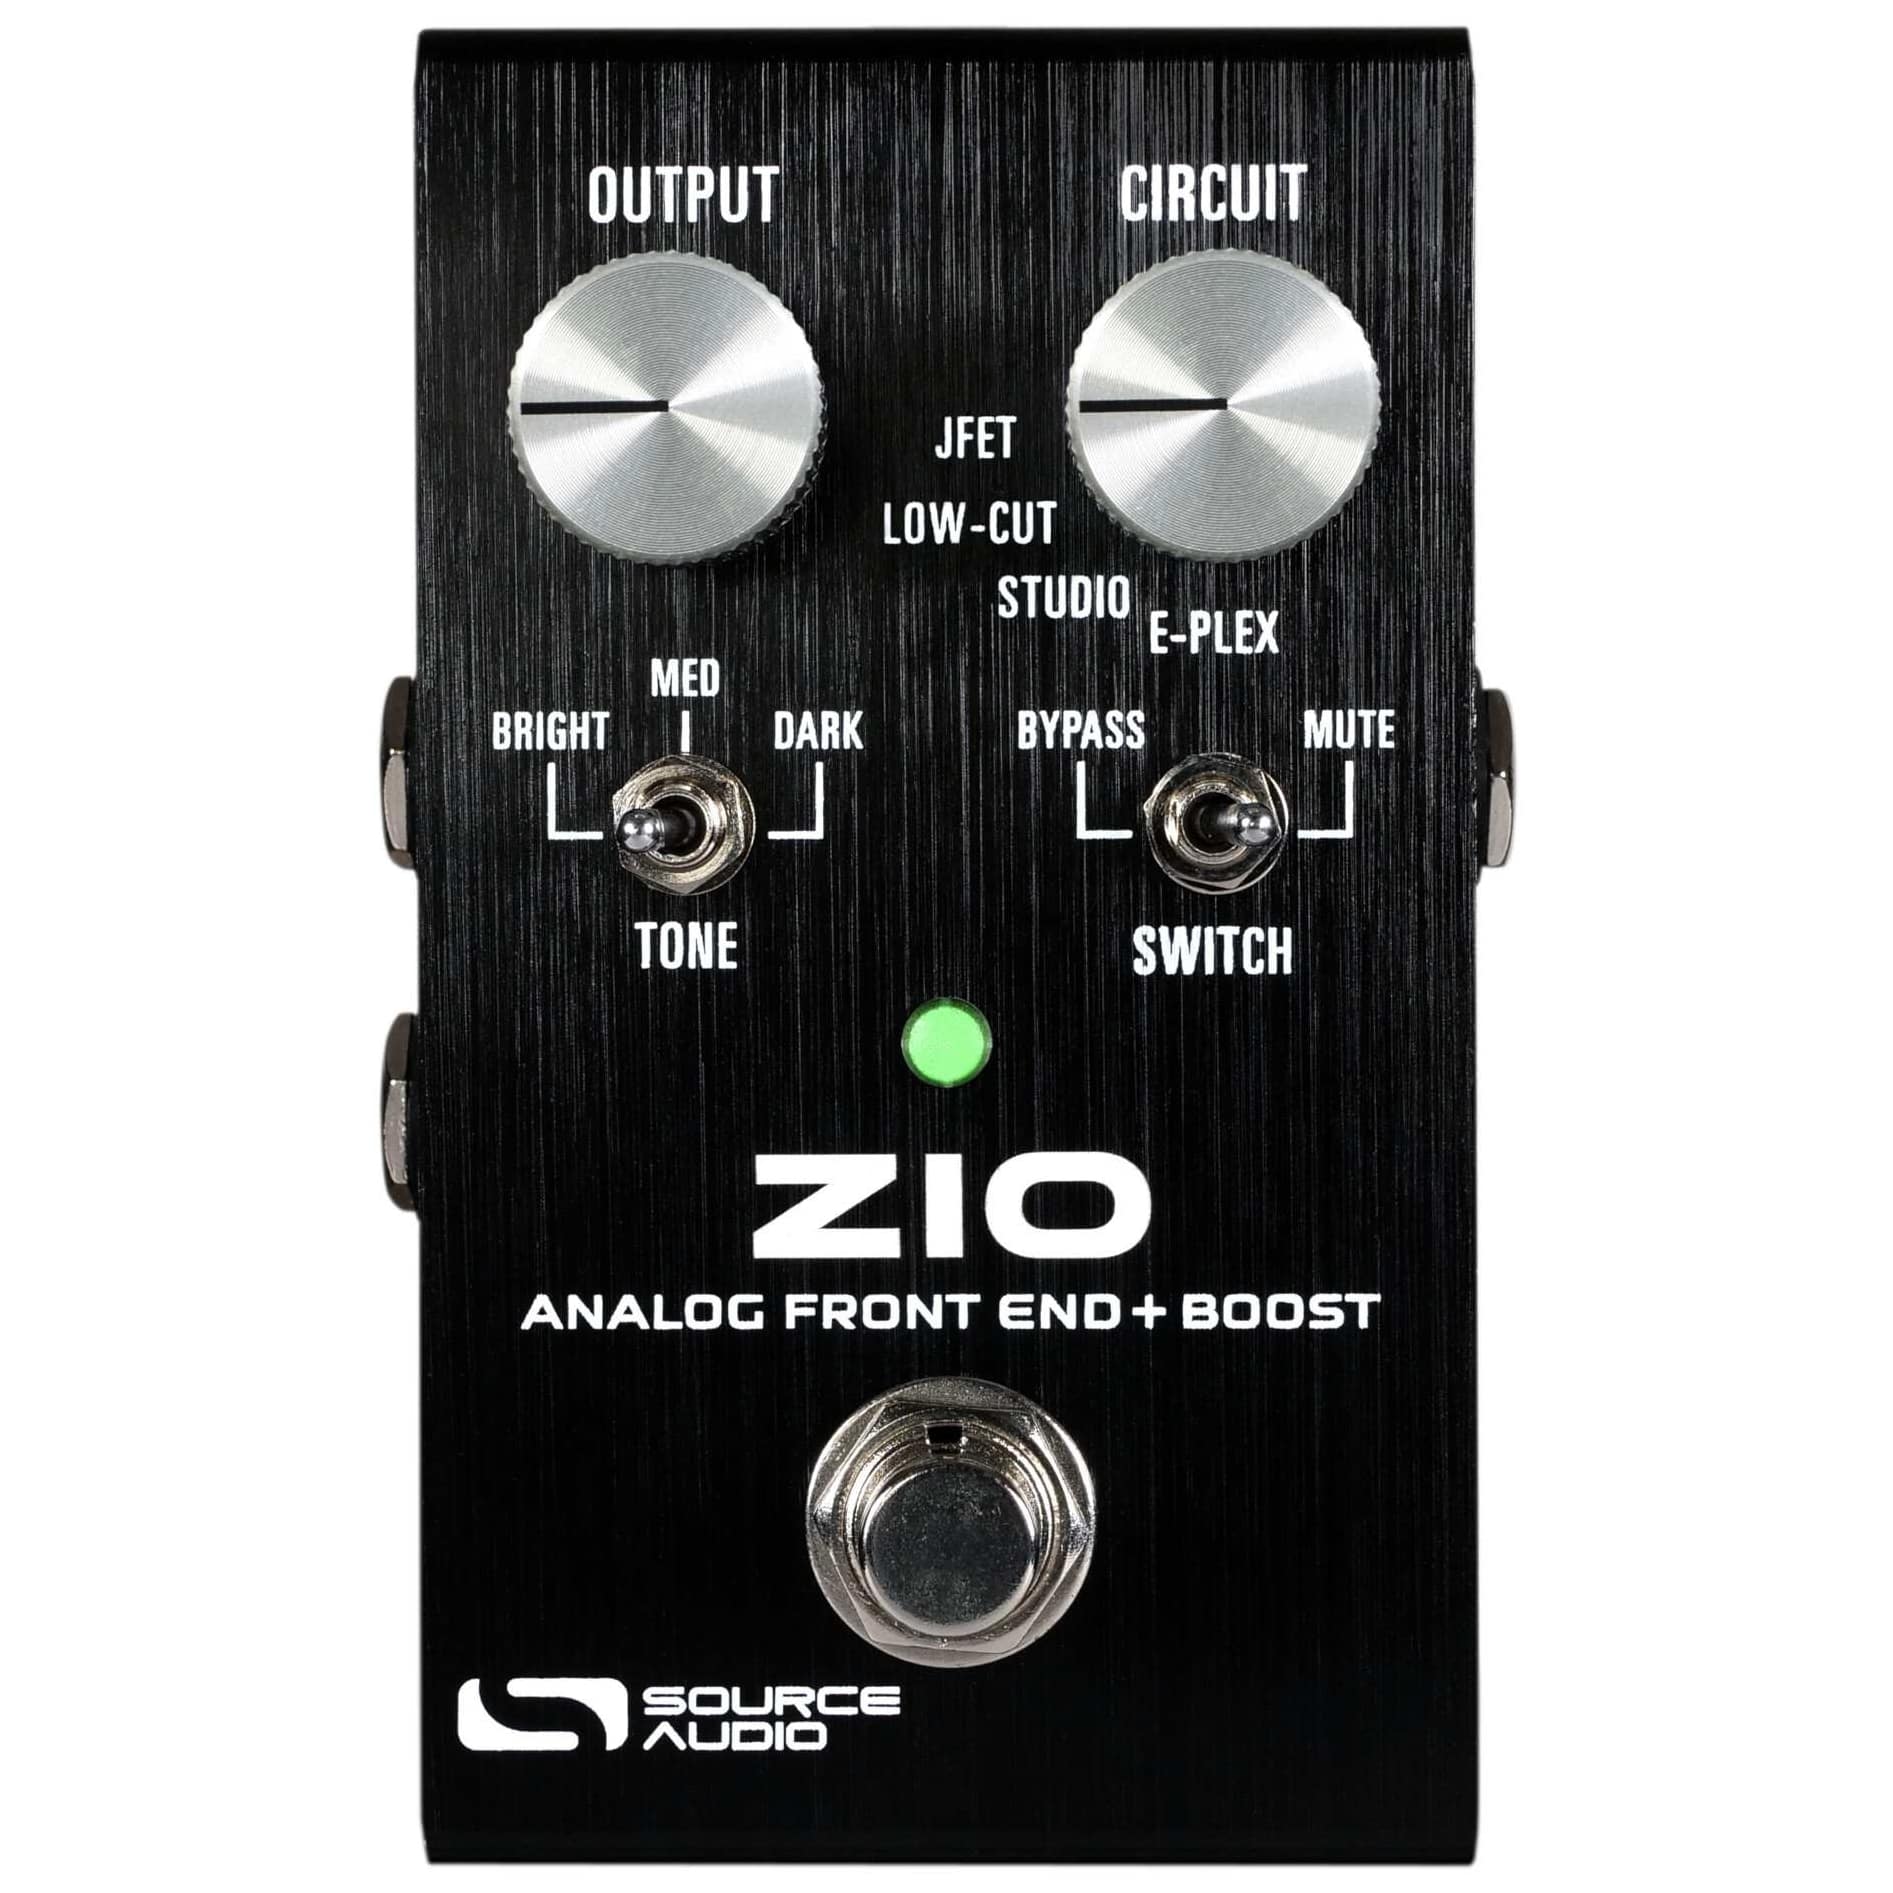 Source Audio SA 271-ZIO Analog Front End + Boost B-Ware